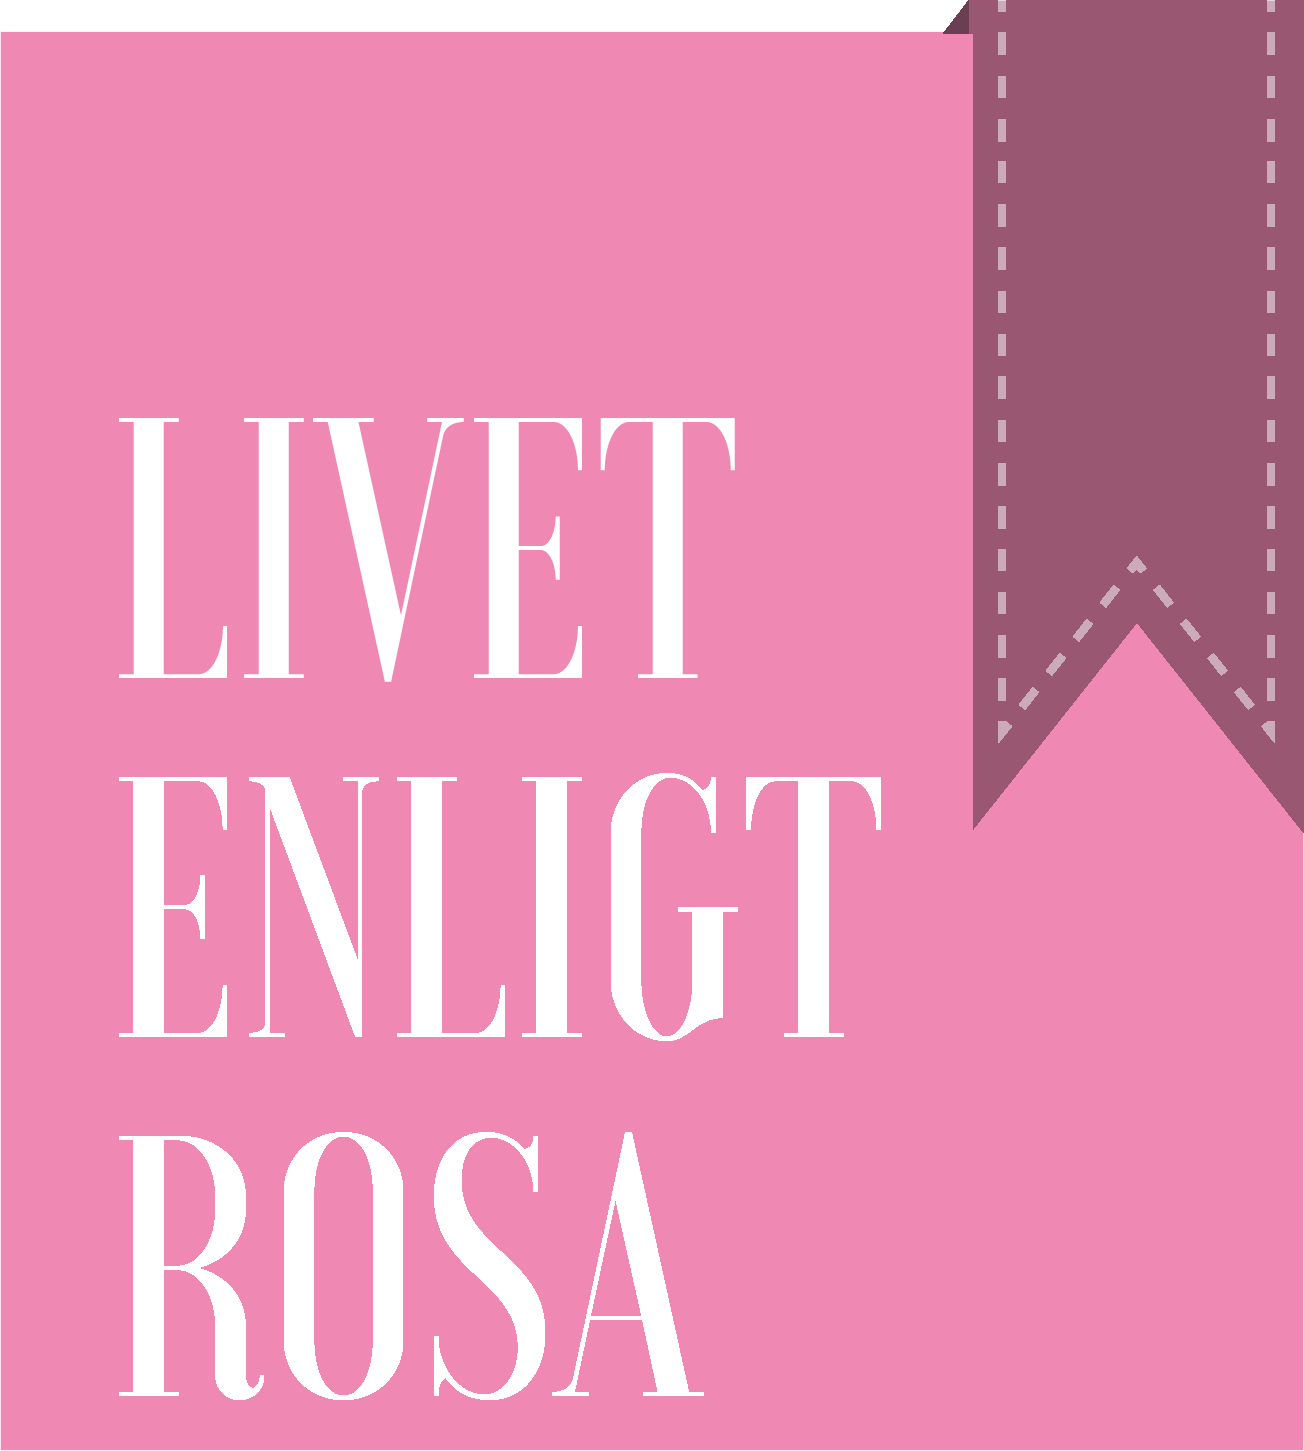 Livet enligt Rosa